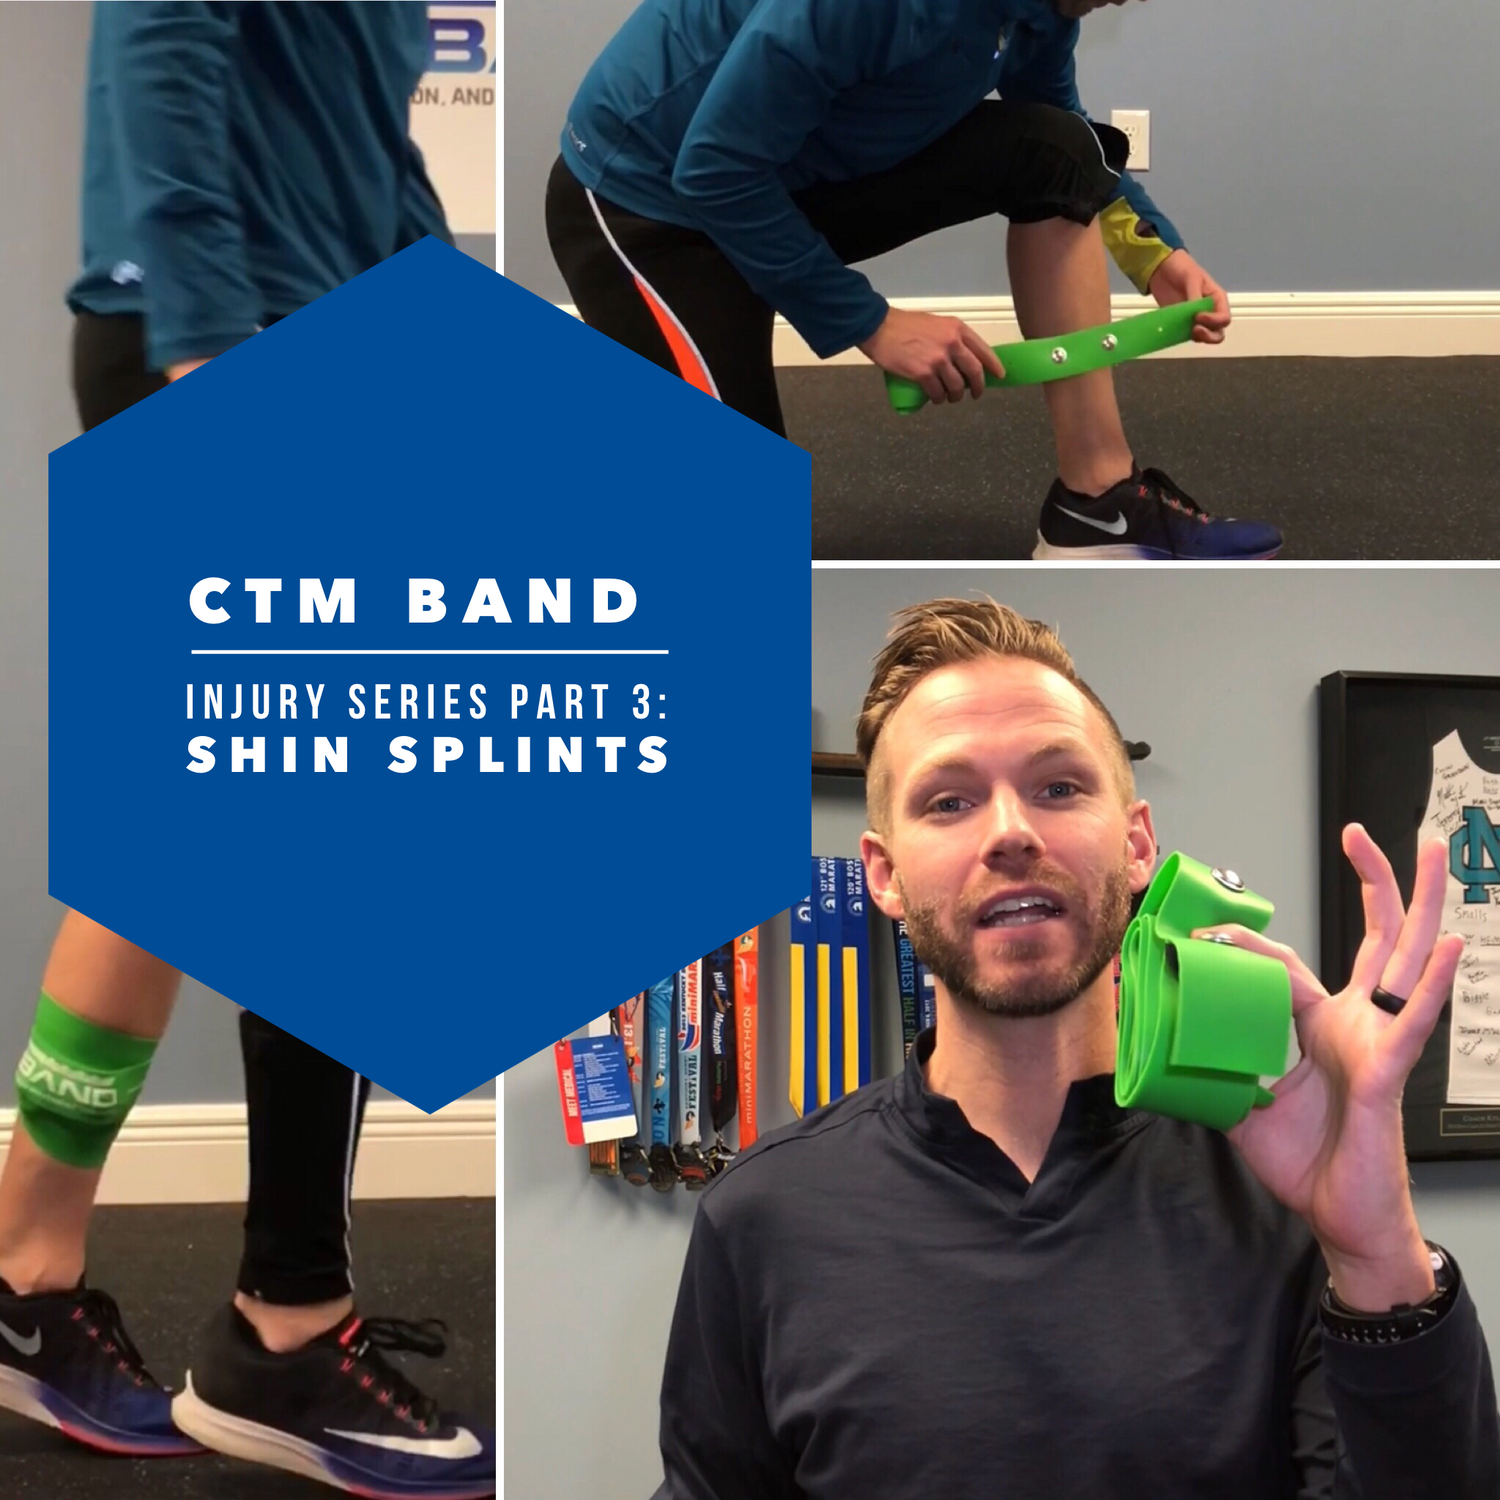 CTM Band Injury Series Part 3: Shin Splints